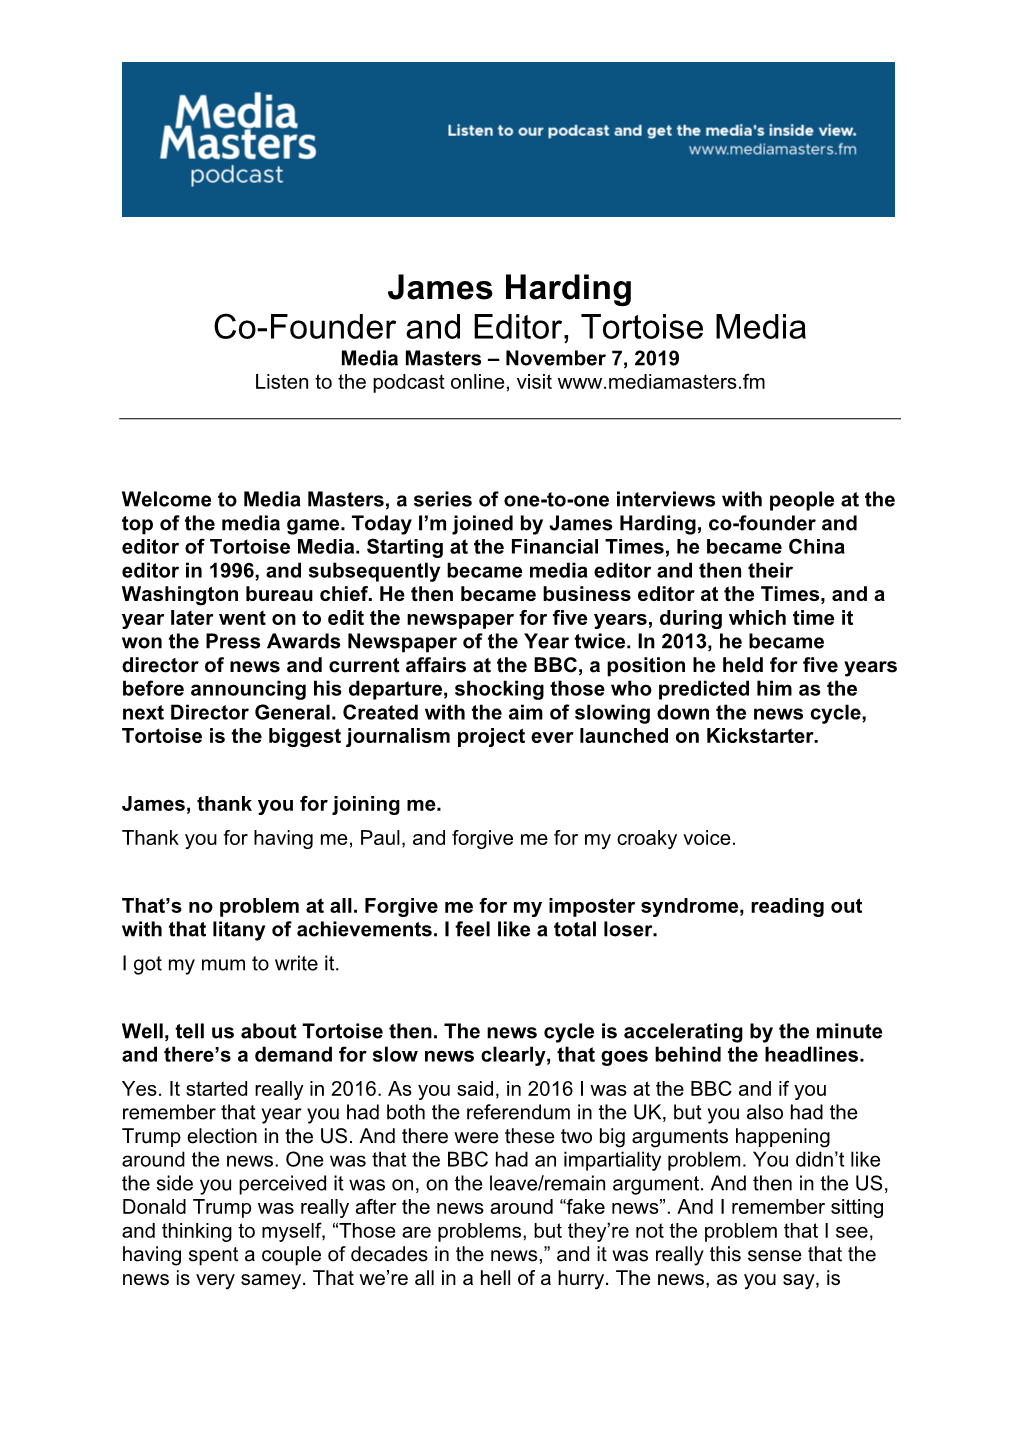 James Harding Co-Founder and Editor, Tortoise Media Media Masters – November 7, 2019 Listen to the Podcast Online, Visit